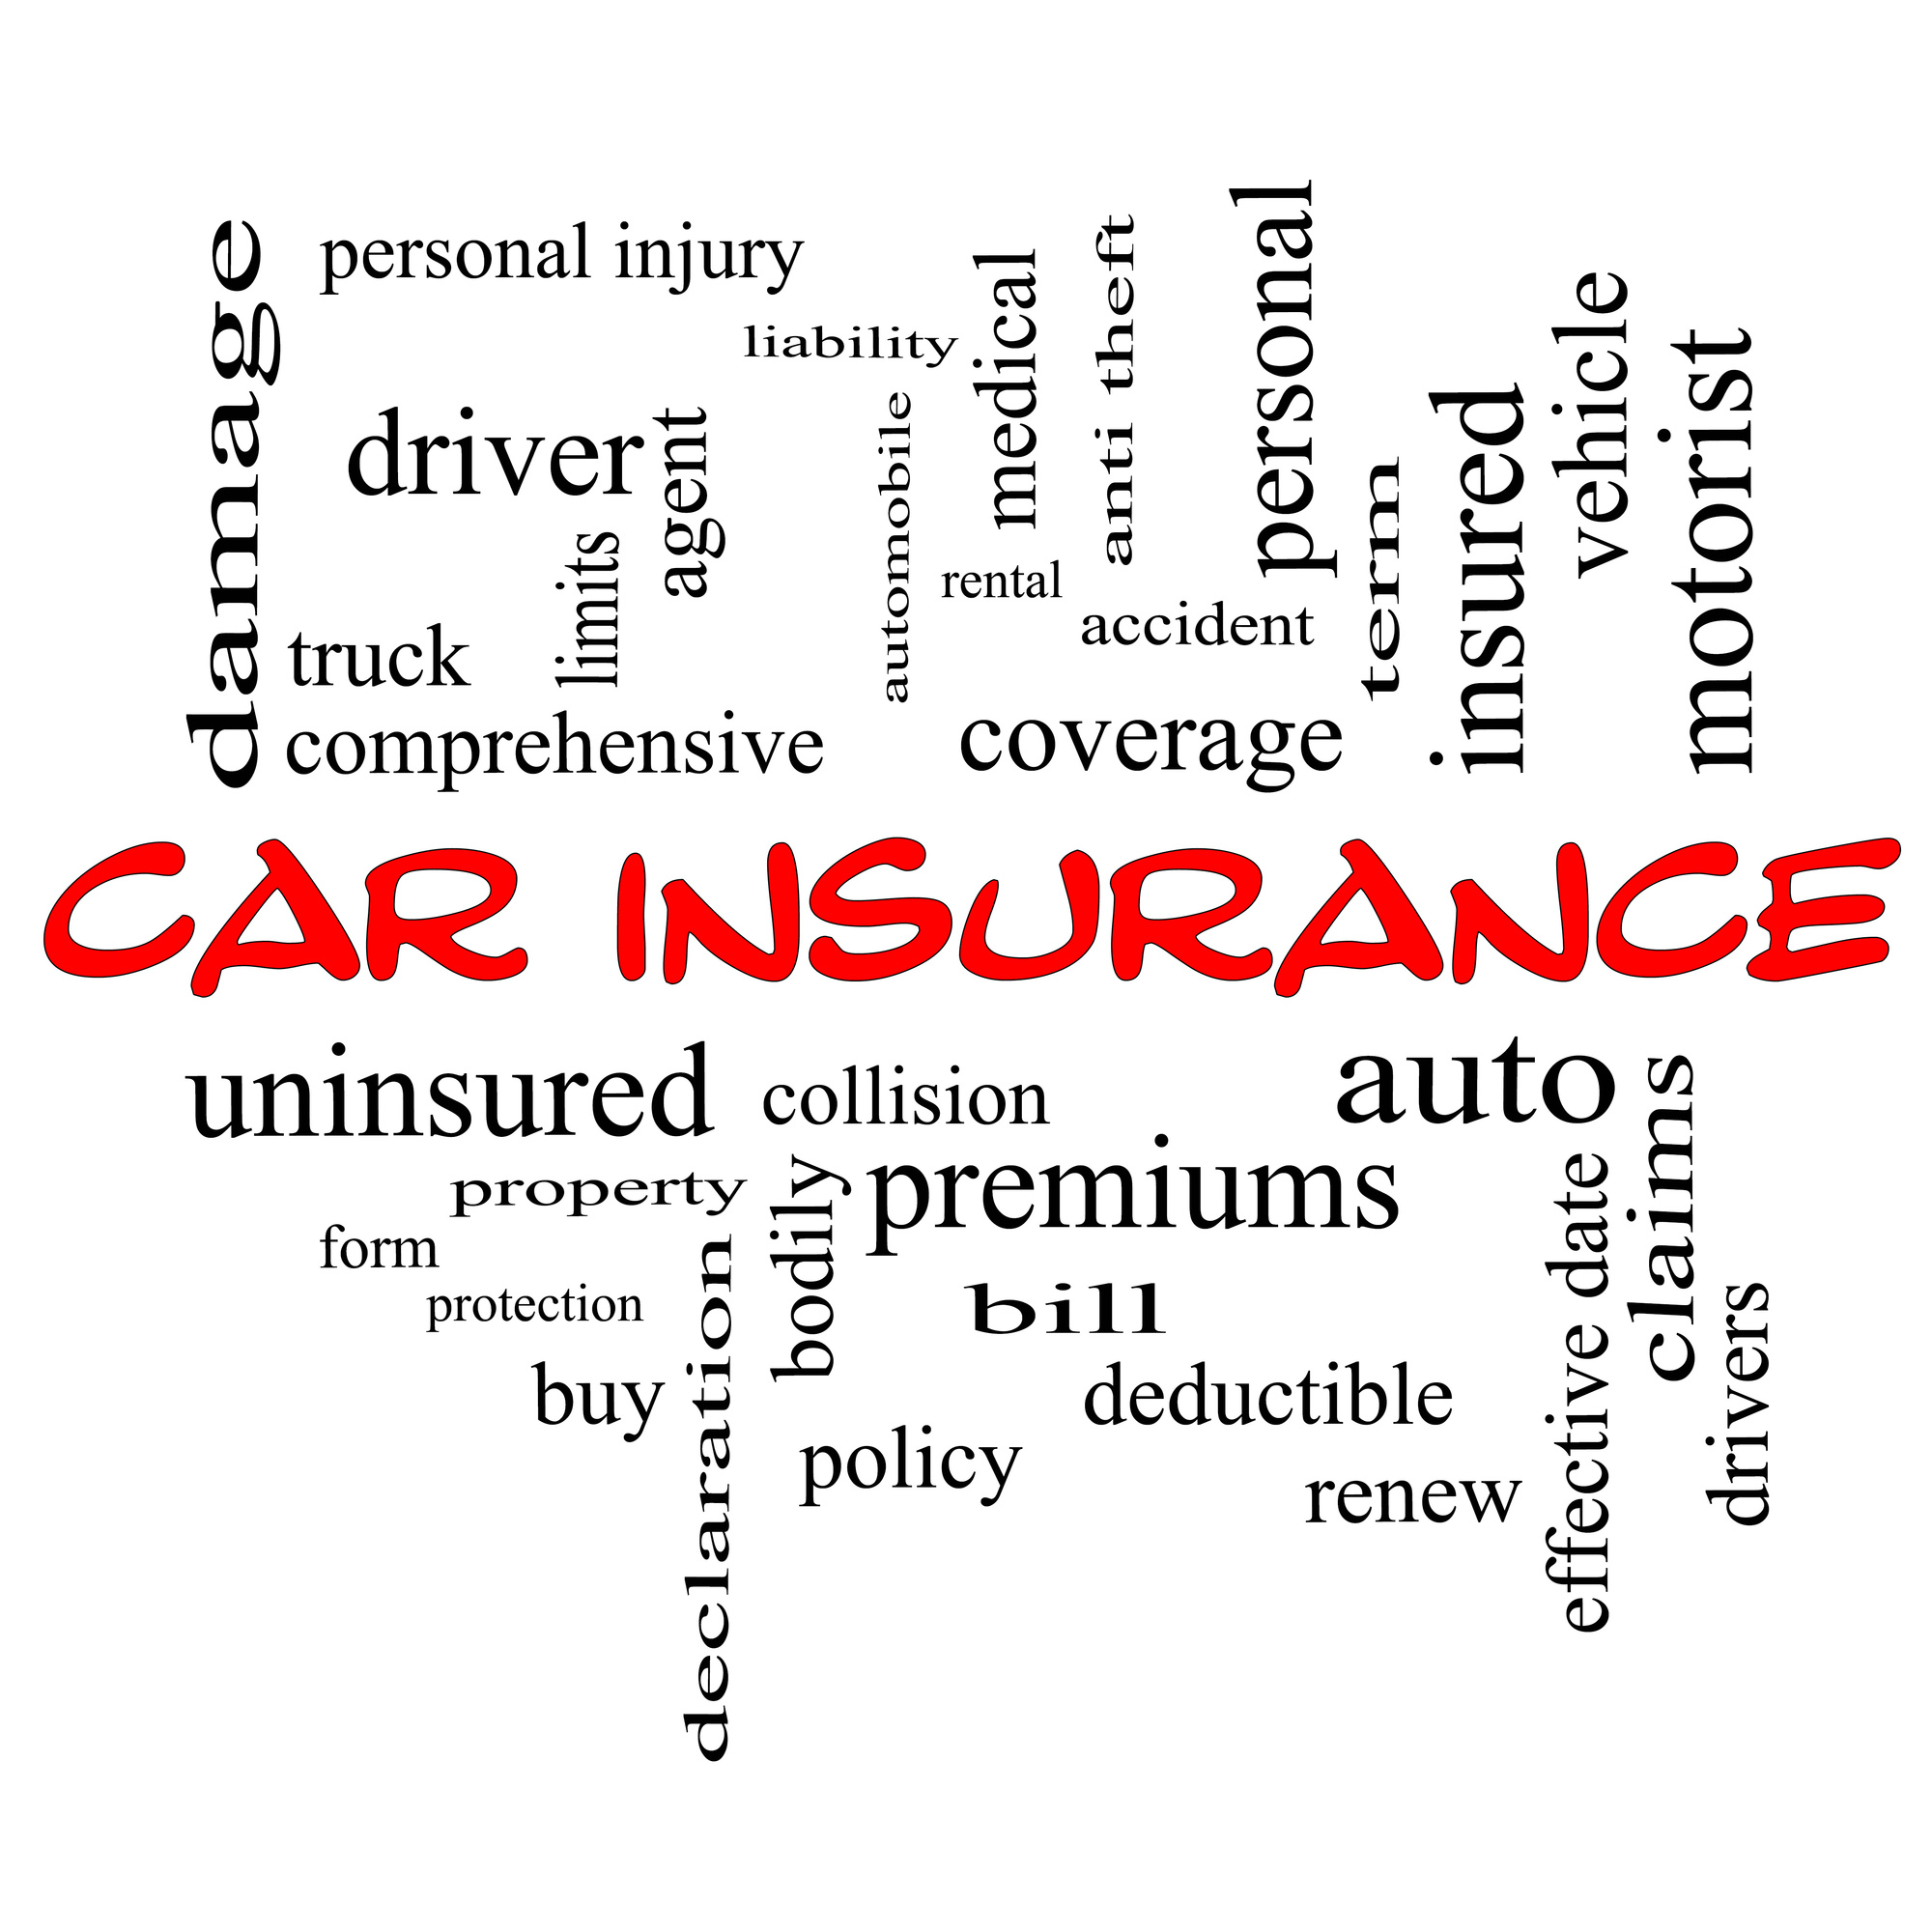 car insurance tag cloud